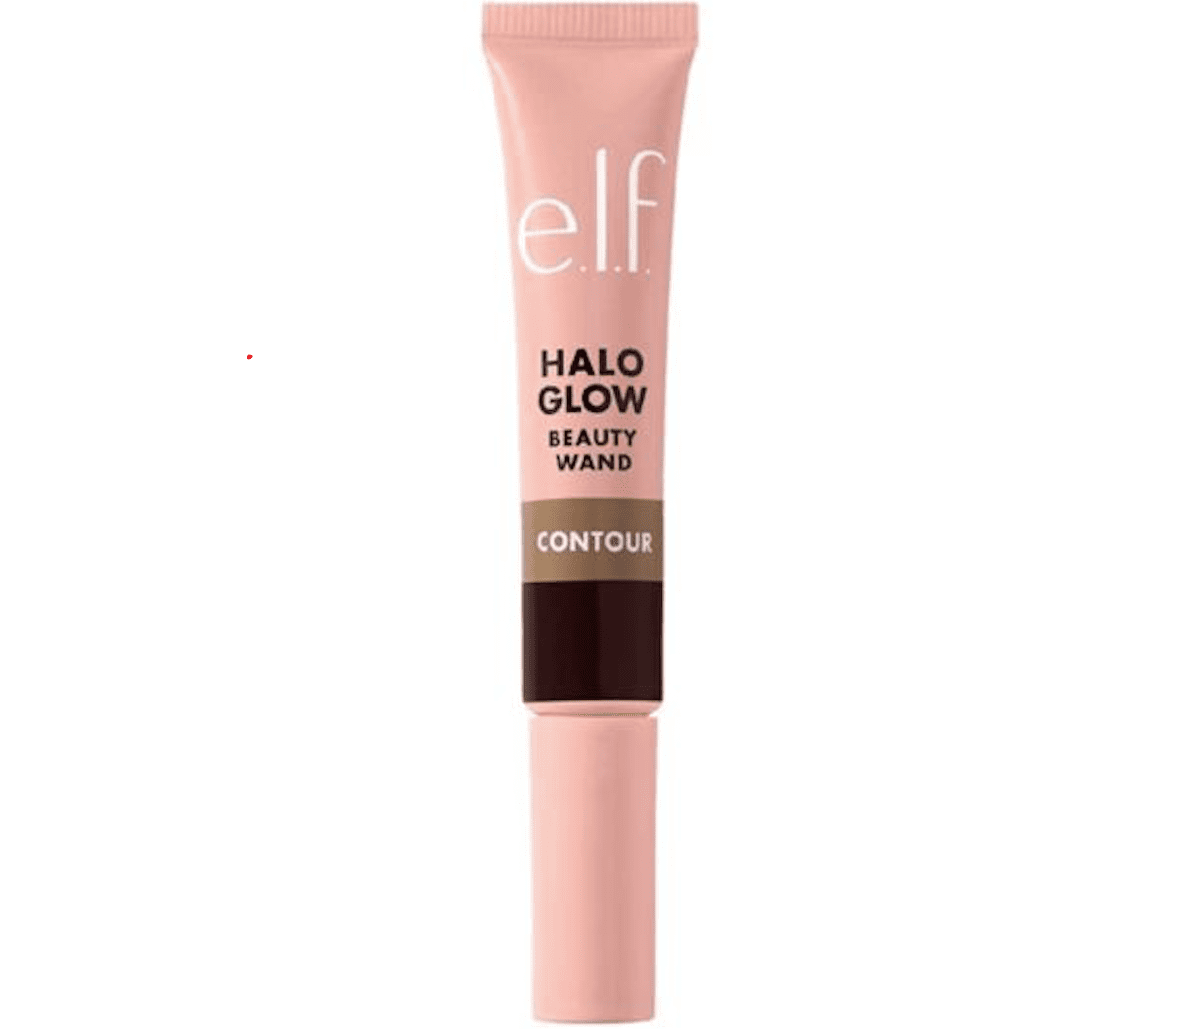 Slim pink tube against a white background of e.l.f halo contour stick.